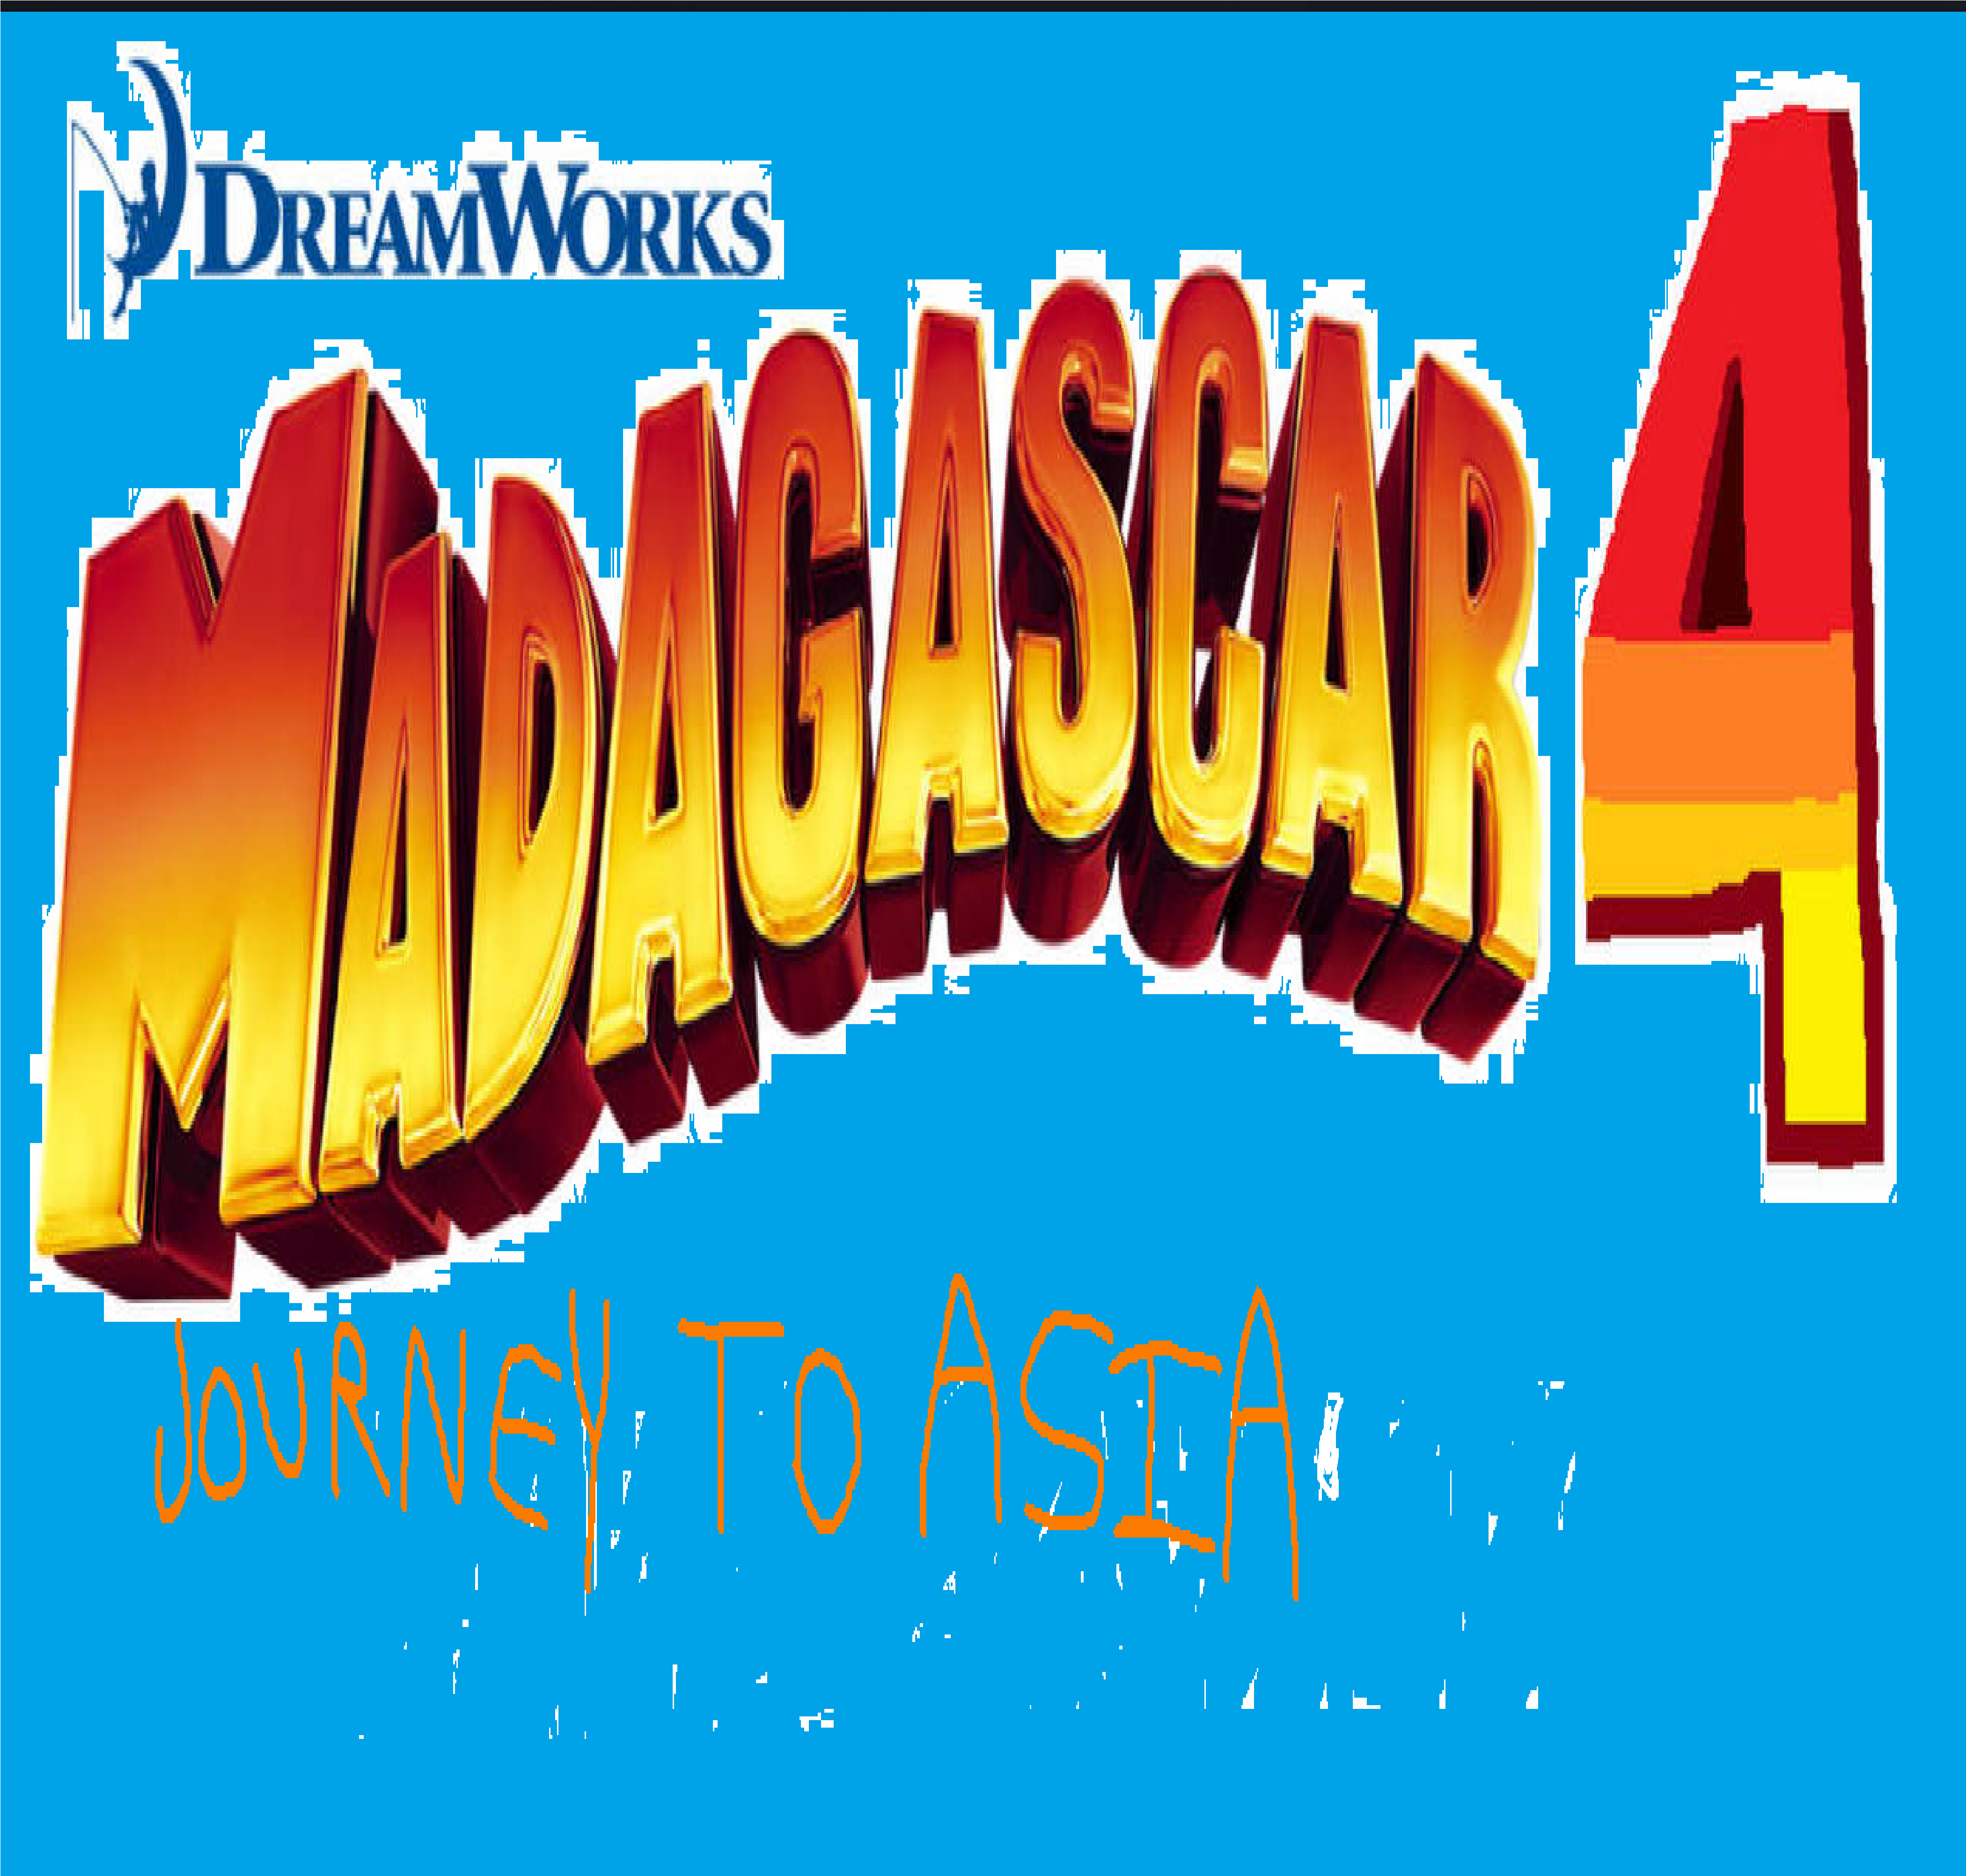 Madagascar 4, Madagascar 4 Wiki